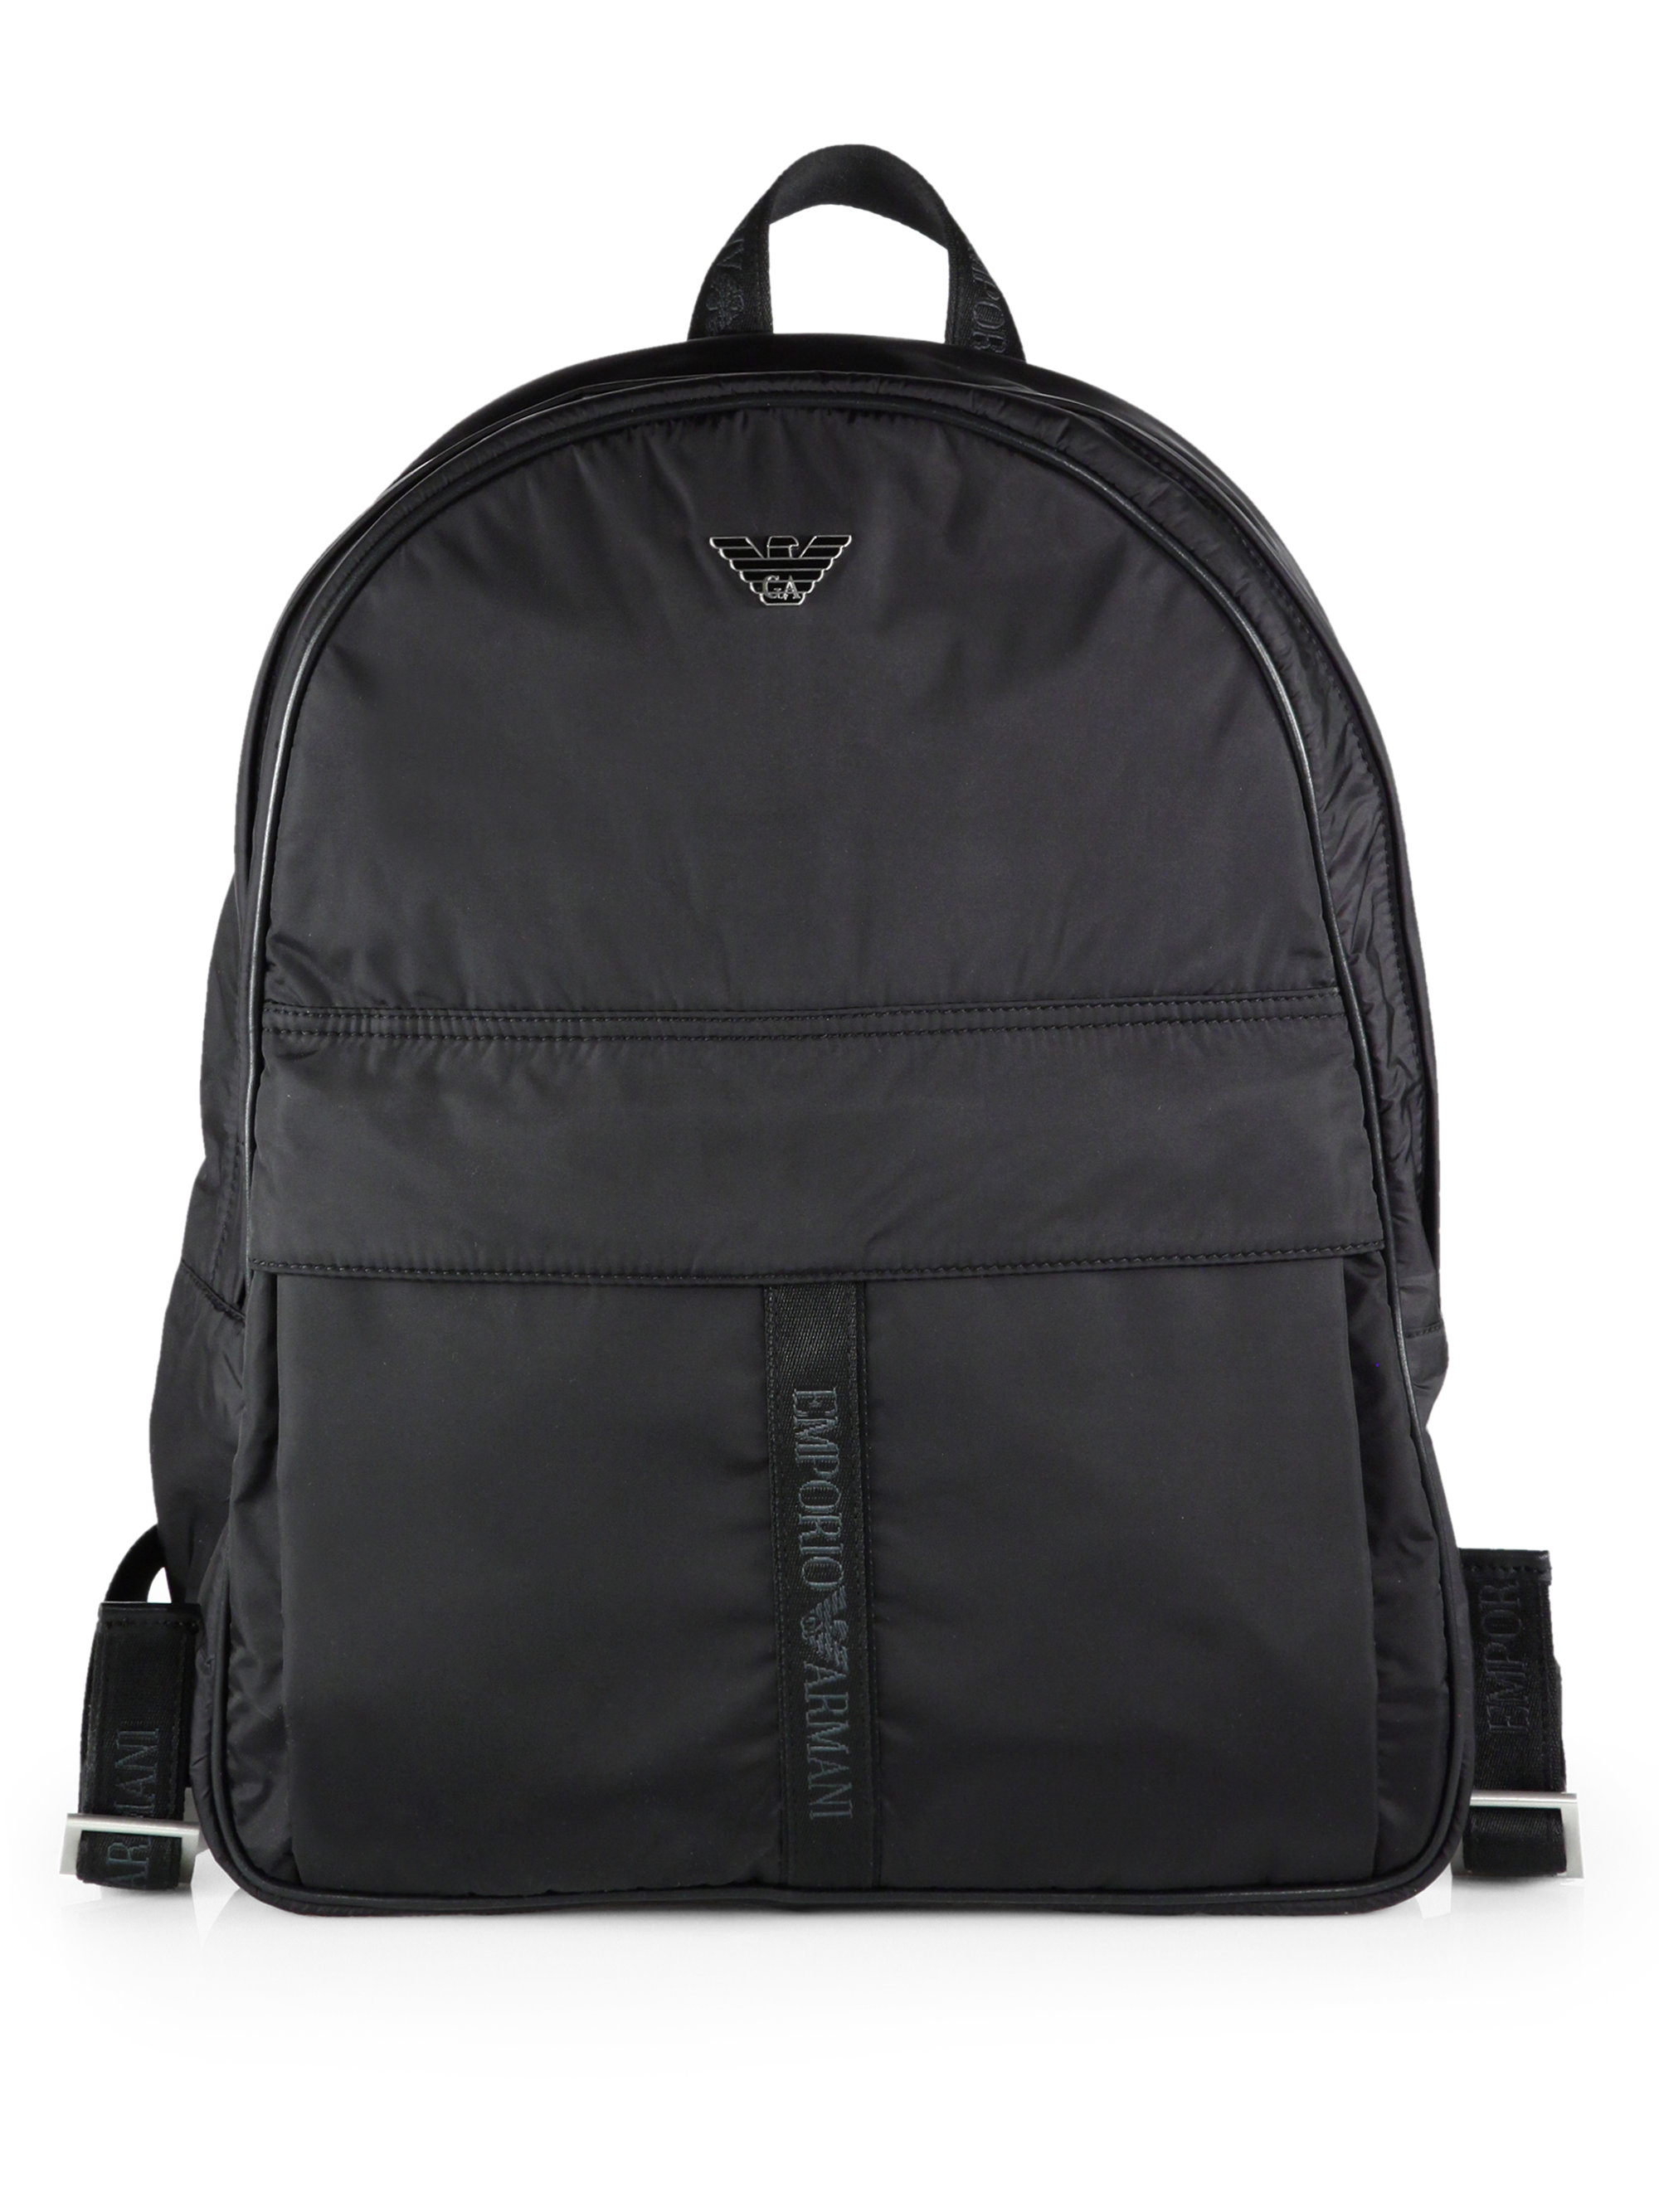 Emporio armani Nylon Backpack in Black for Men | Lyst